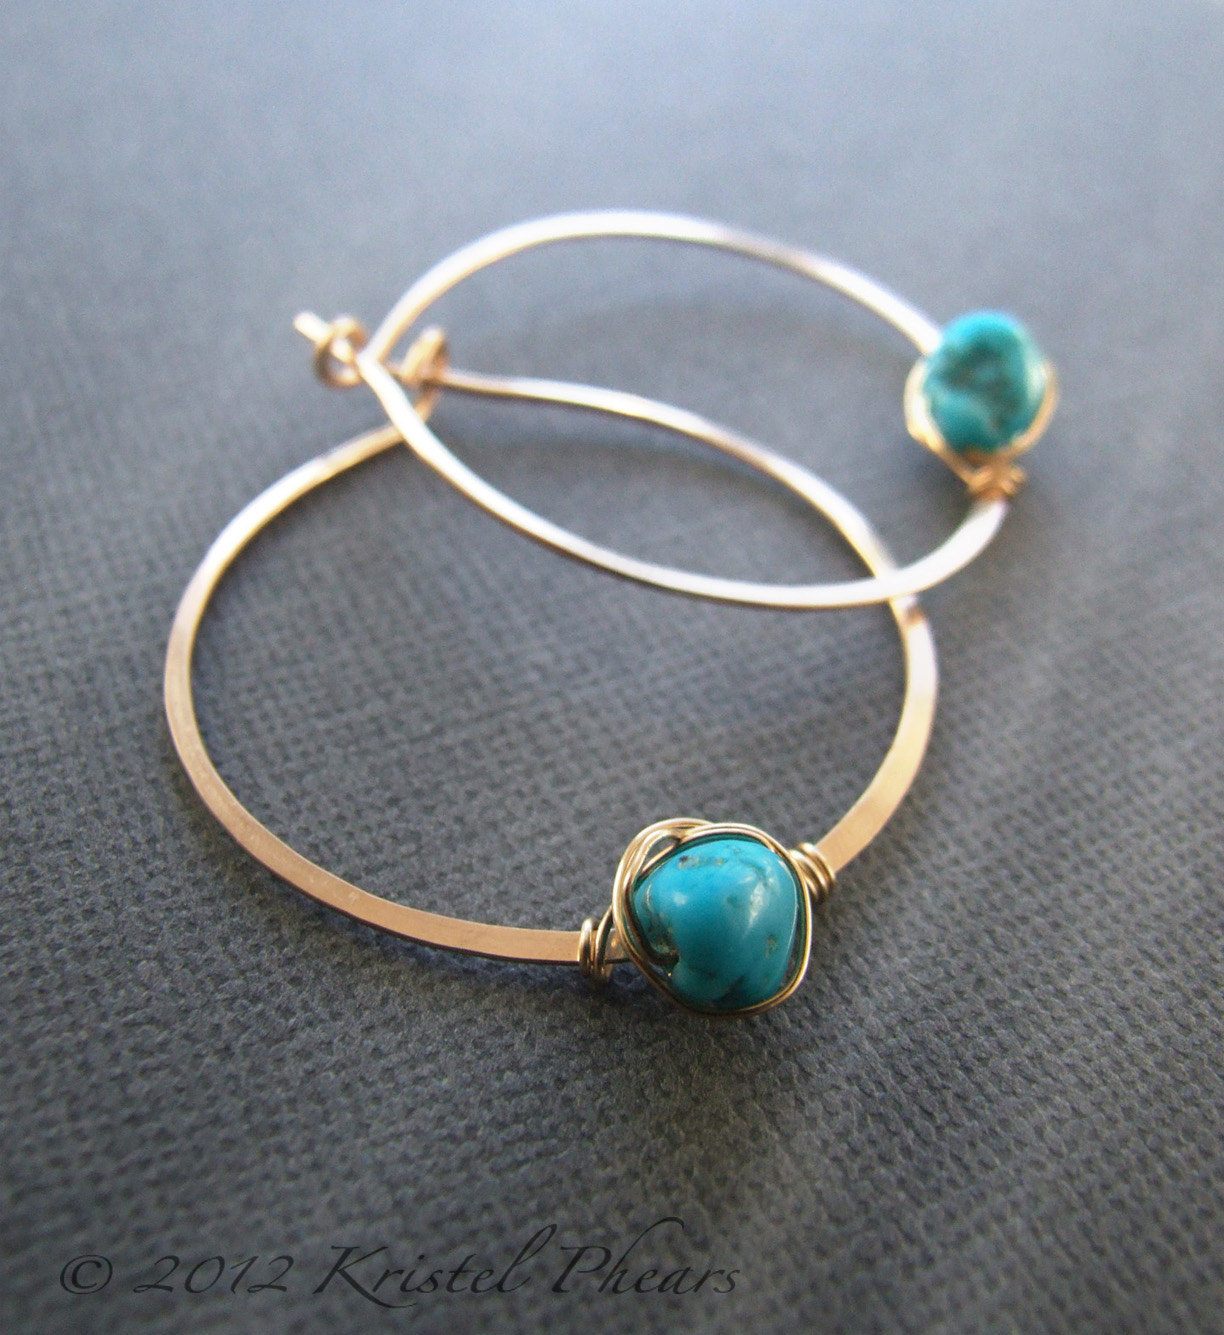 Turquoise earrings - genuine Arizona turquoise hoop earrings gold silver 1.5" - $40.00